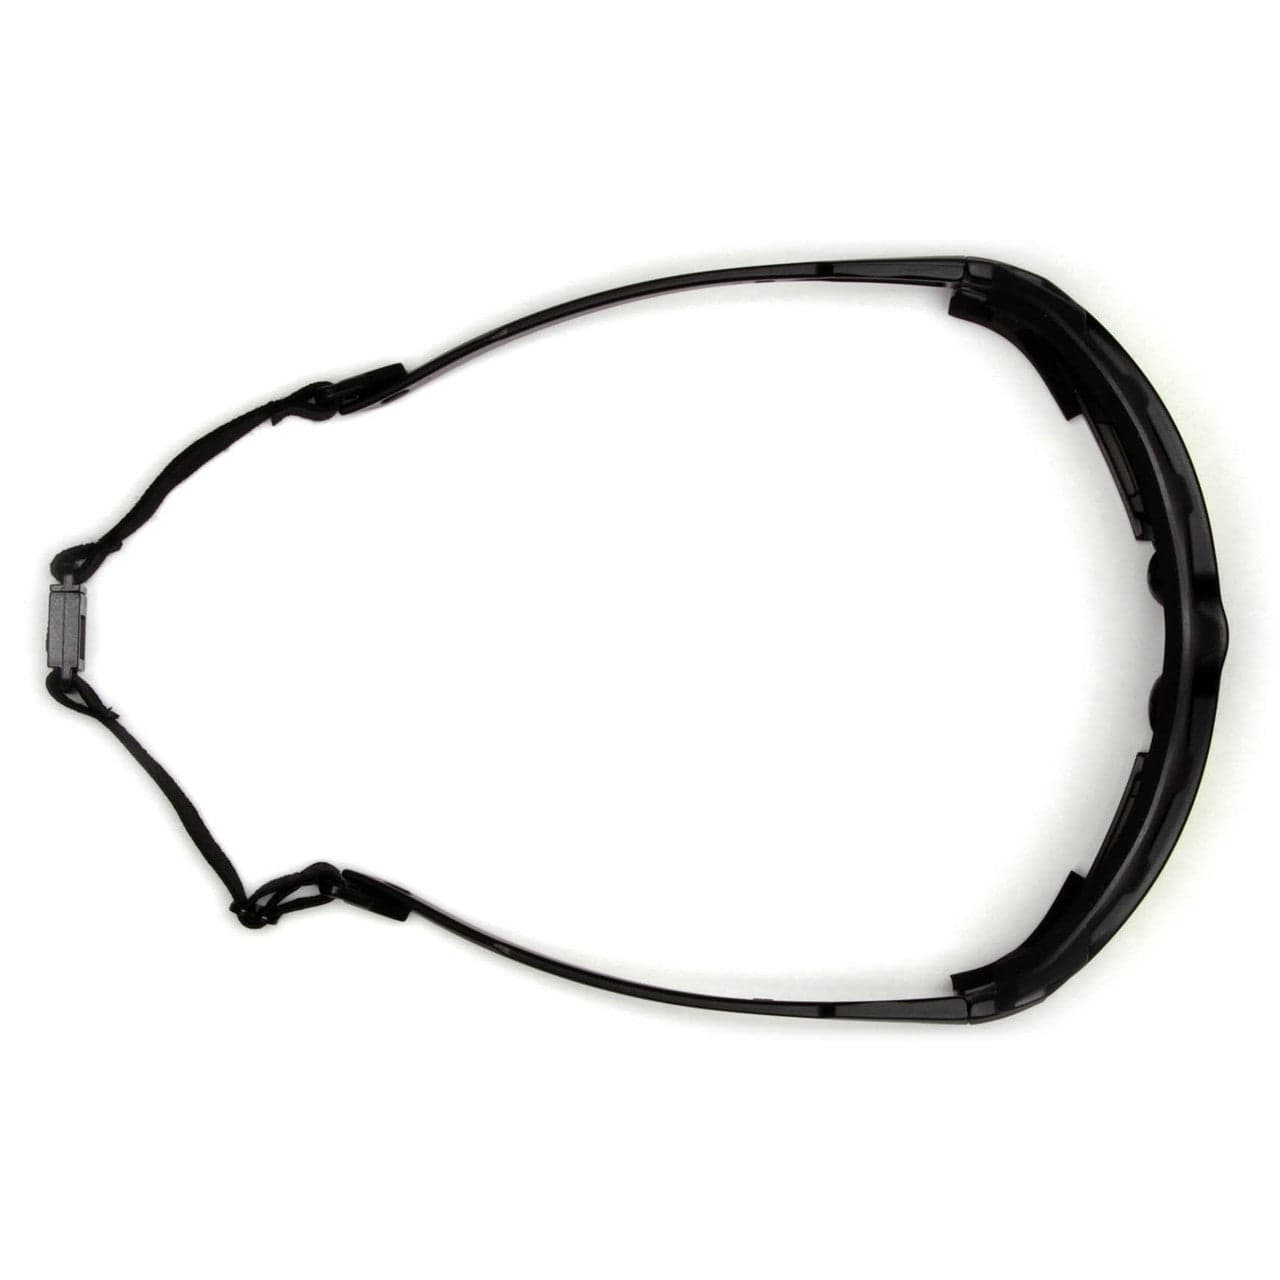 Pyramex Highlander Plus Safety Glasses Black Foam-Lined Frame Gray Anti-Fog Lens SBG5020DT Top